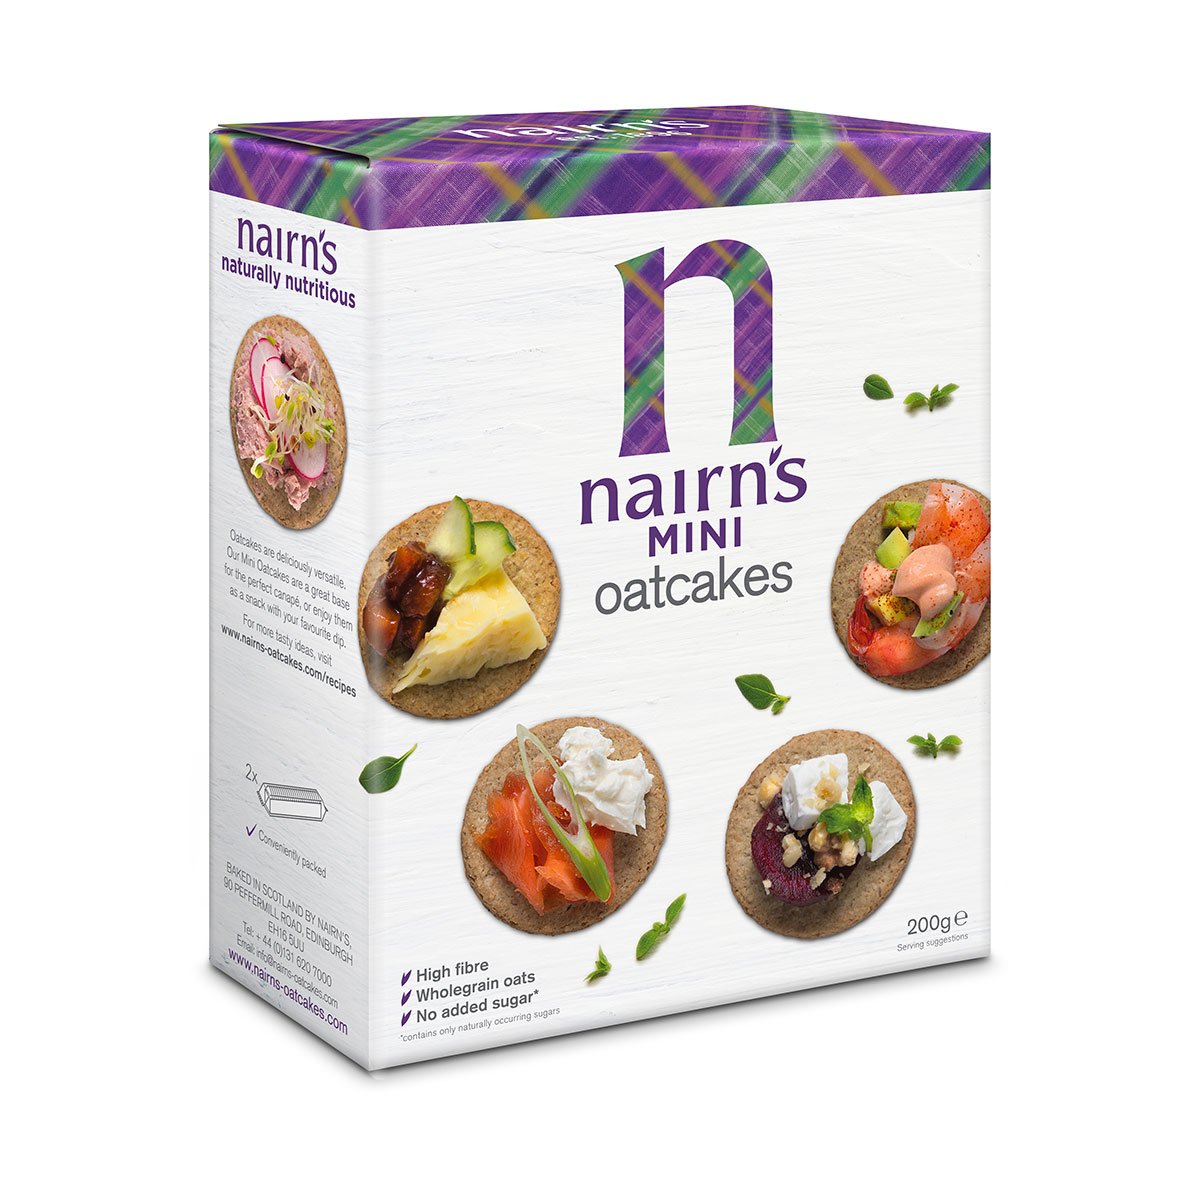 Nairns Mini Oatcakes 200g - Just Natural